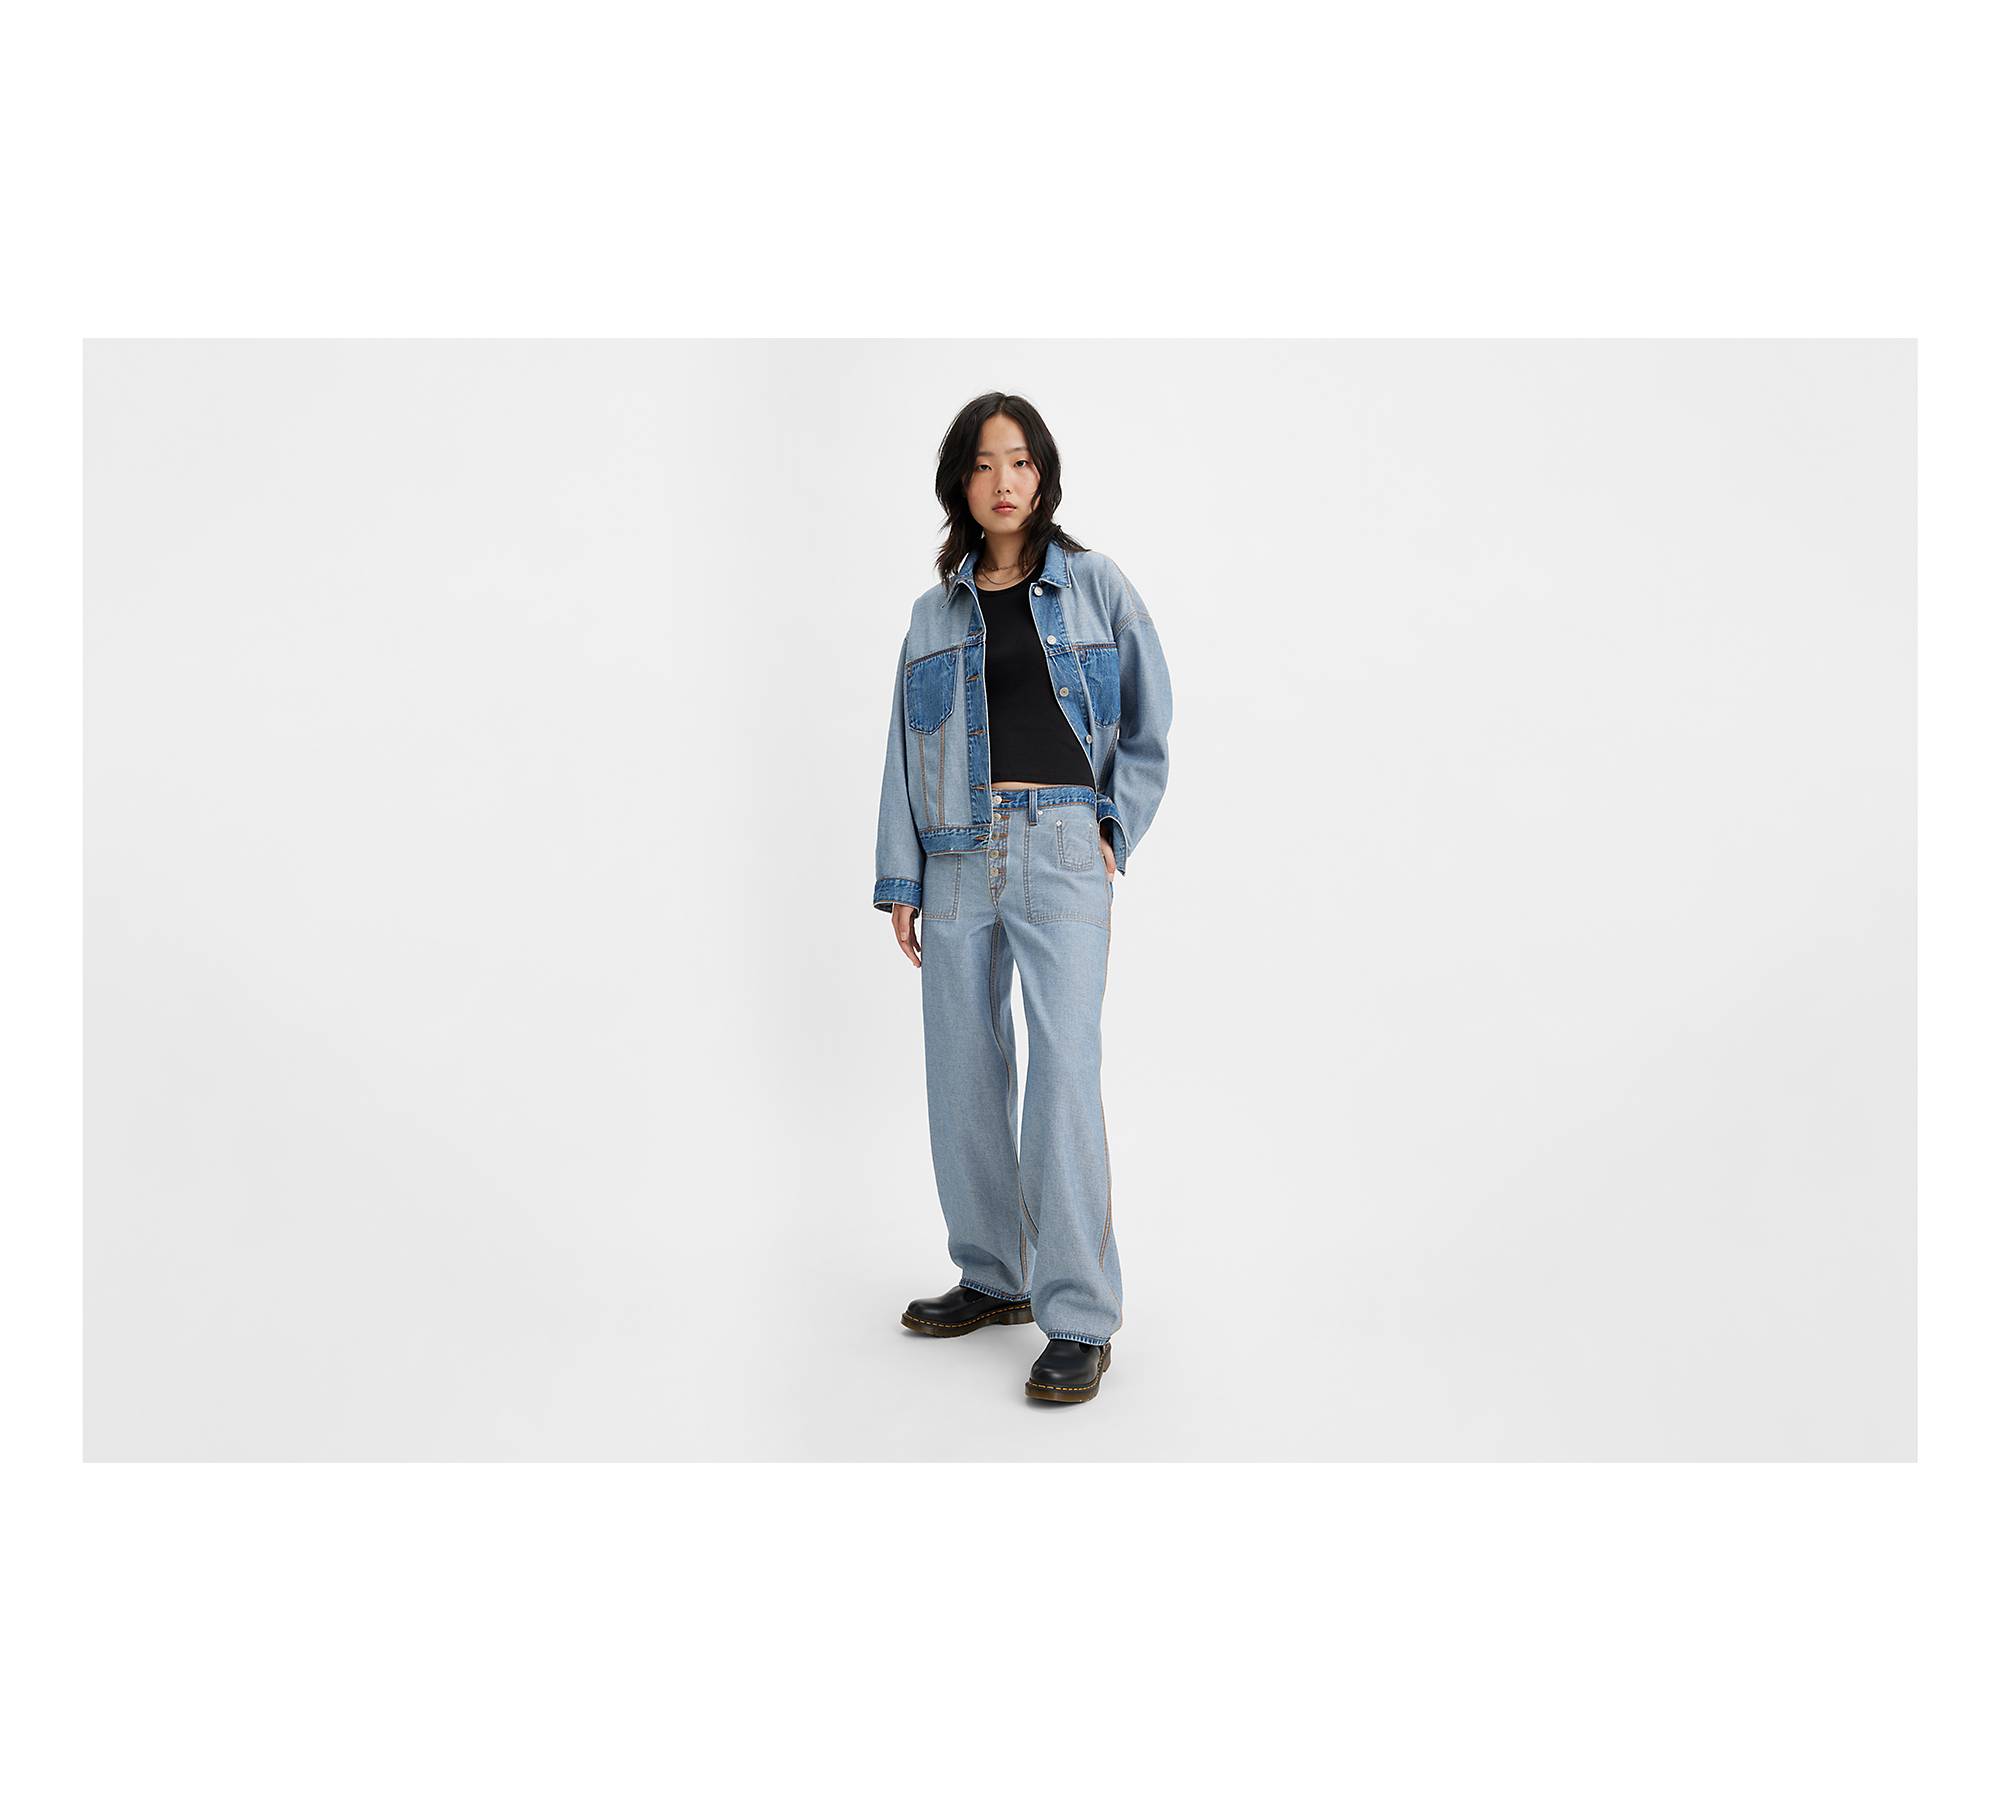 Levi's Baggy Dad Jeans in Bin Day • Shop American Threads Women's